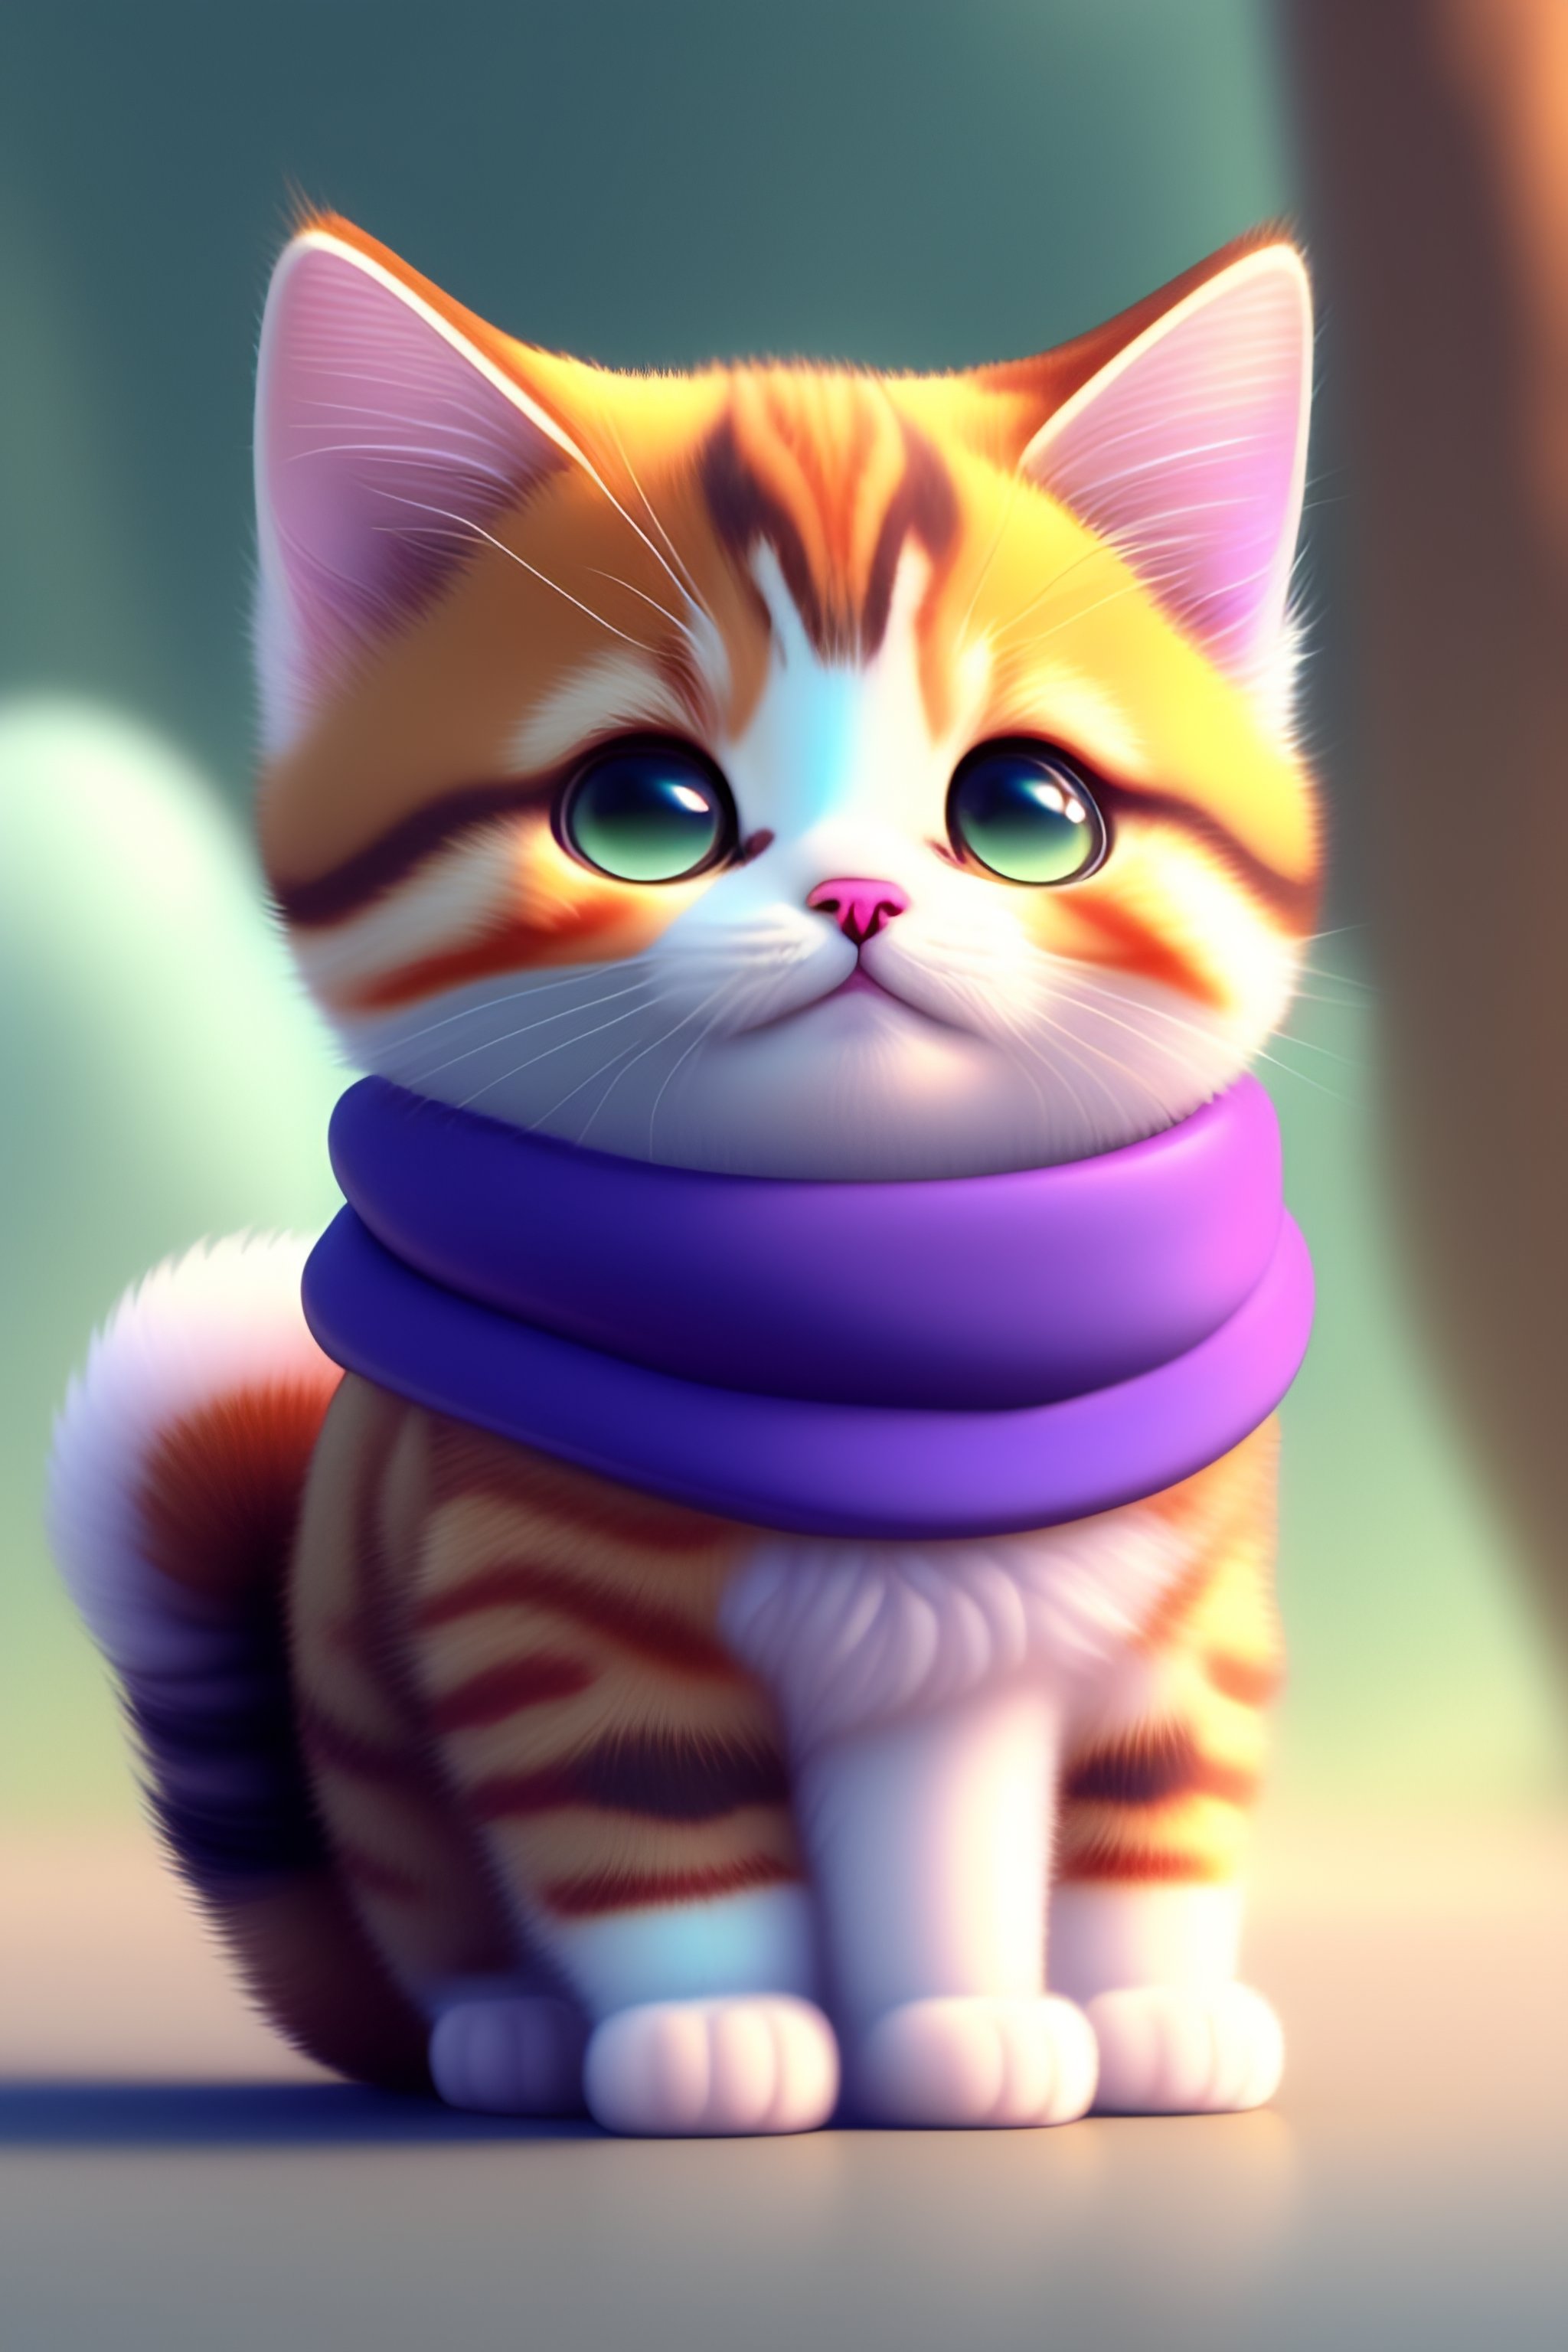 Lexica - Cute and adorable cartoon fluffy baby cat , fantasy, dreamlike ...